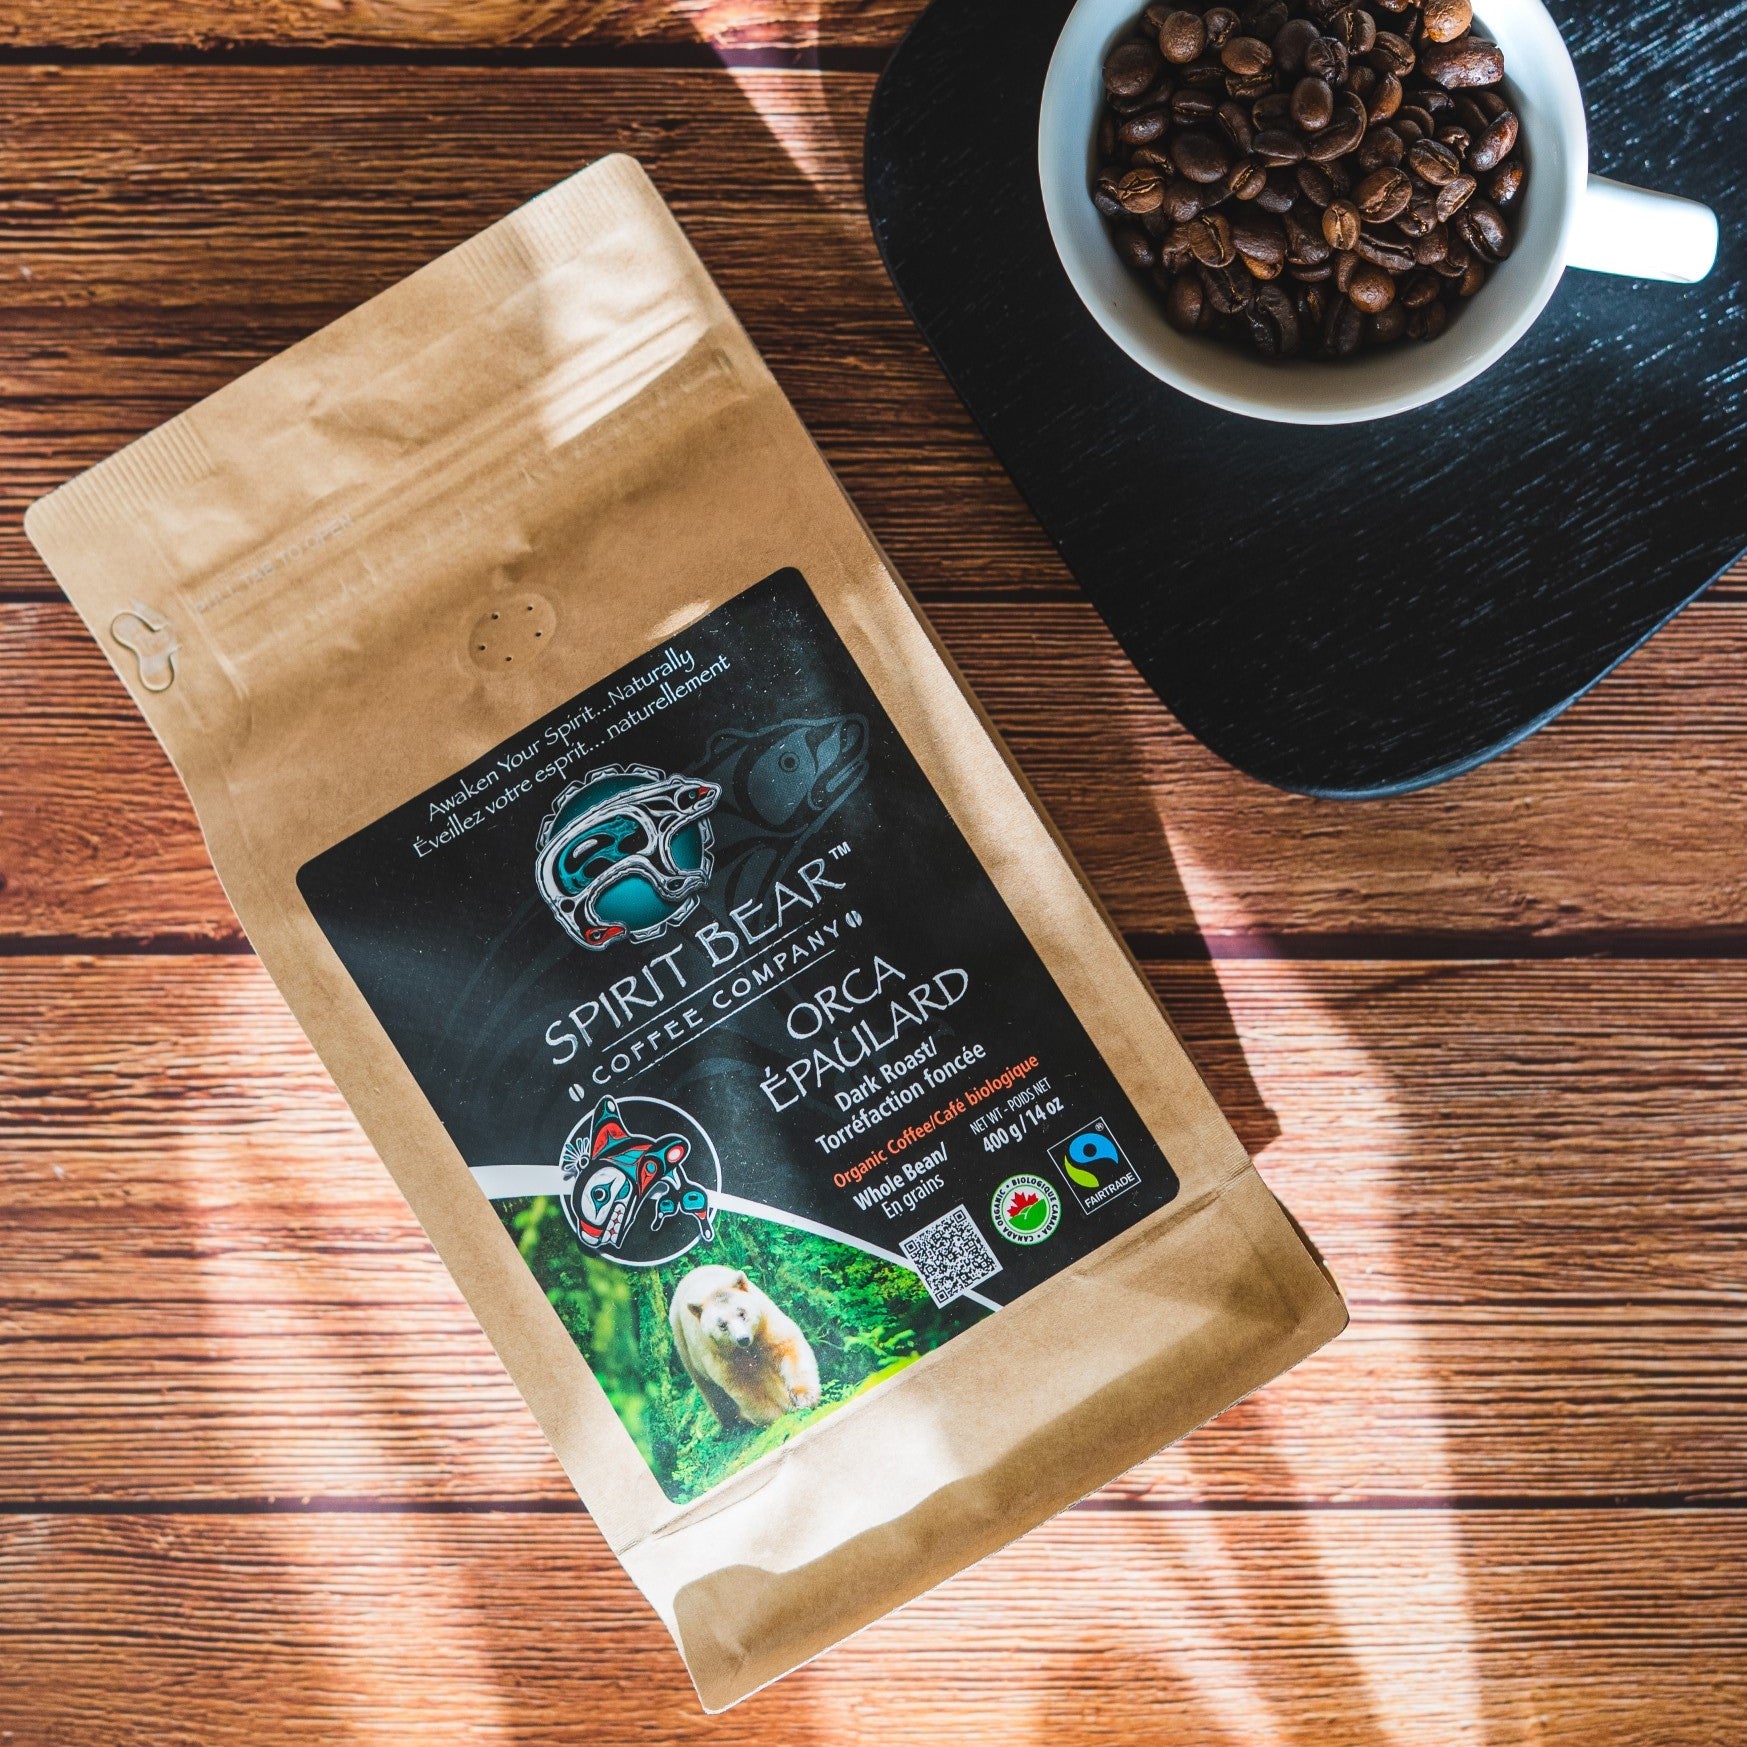 Orca - Dark Roast Coffee - Spirit Bear Coffee Company, Order coffee online Canada, wholesale coffee, organic and fair trade coffee